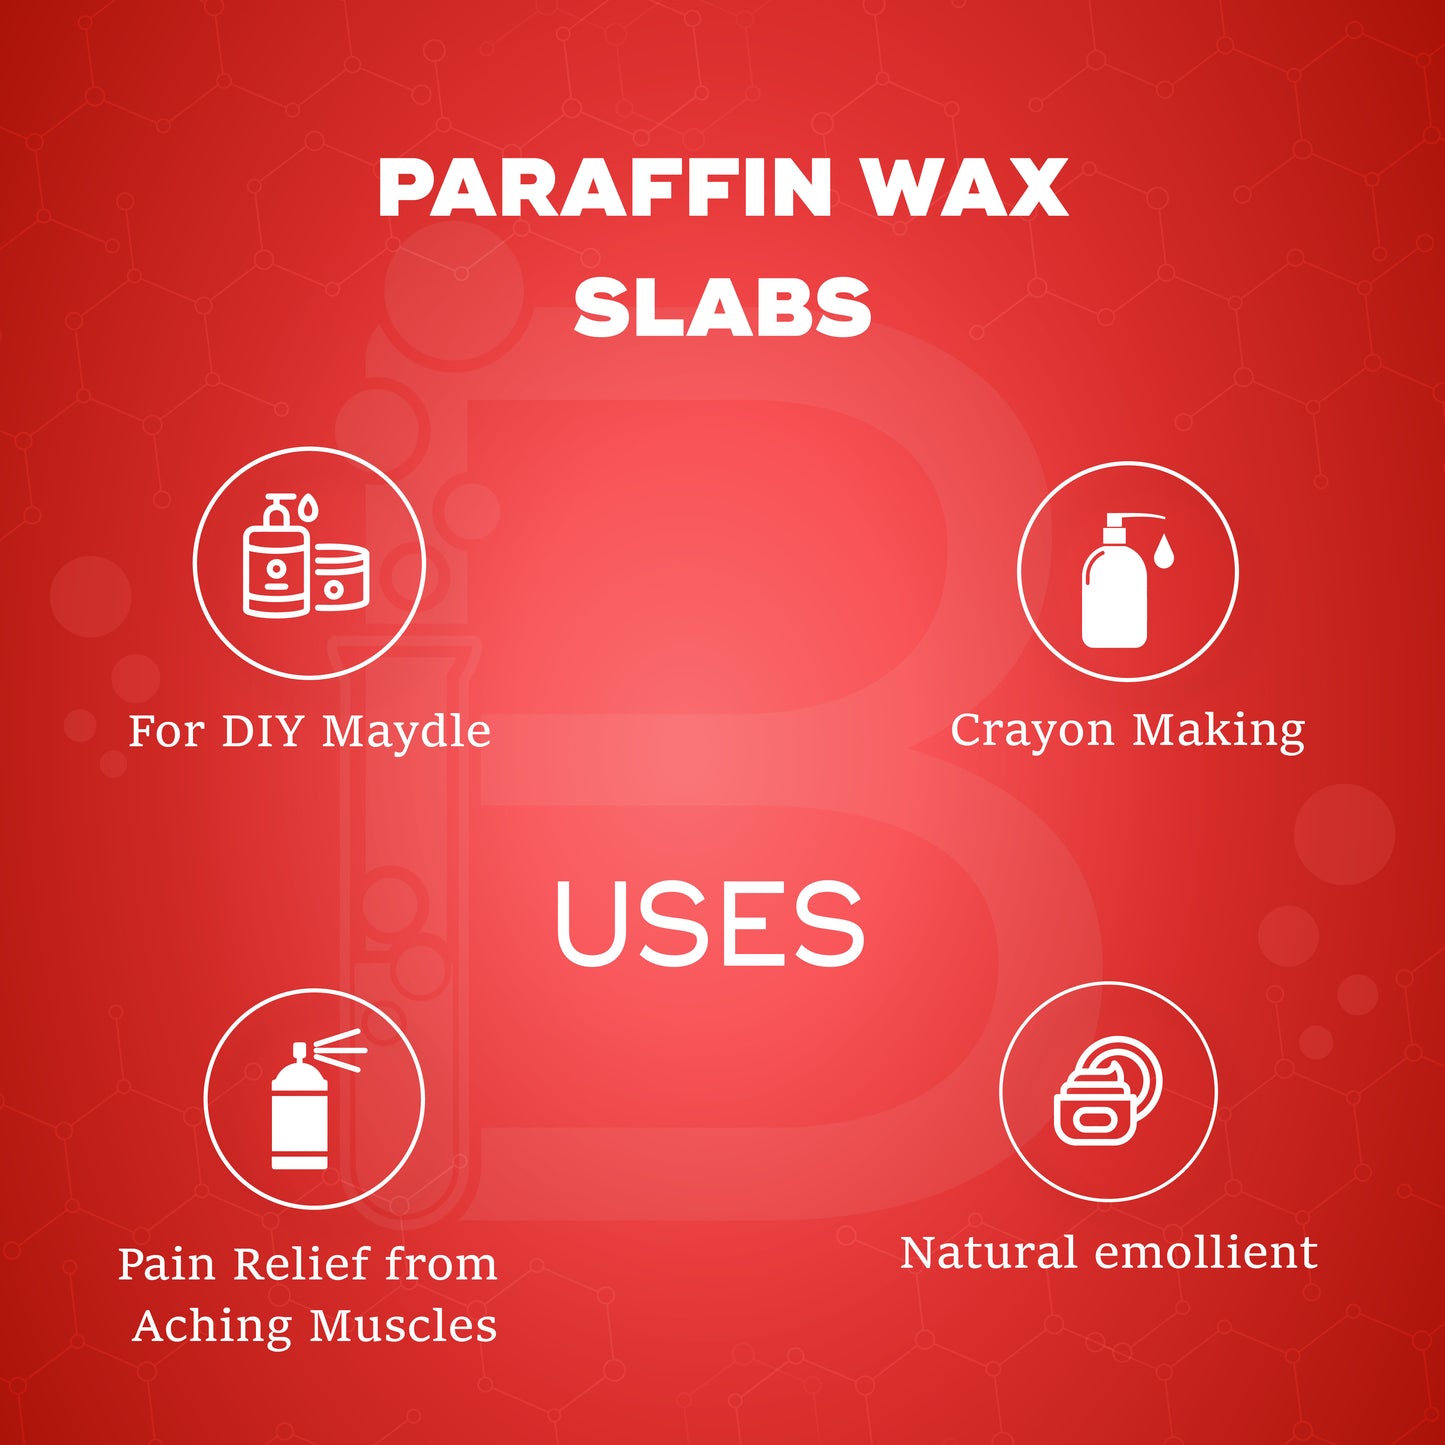 Paraffin Wax Slabs